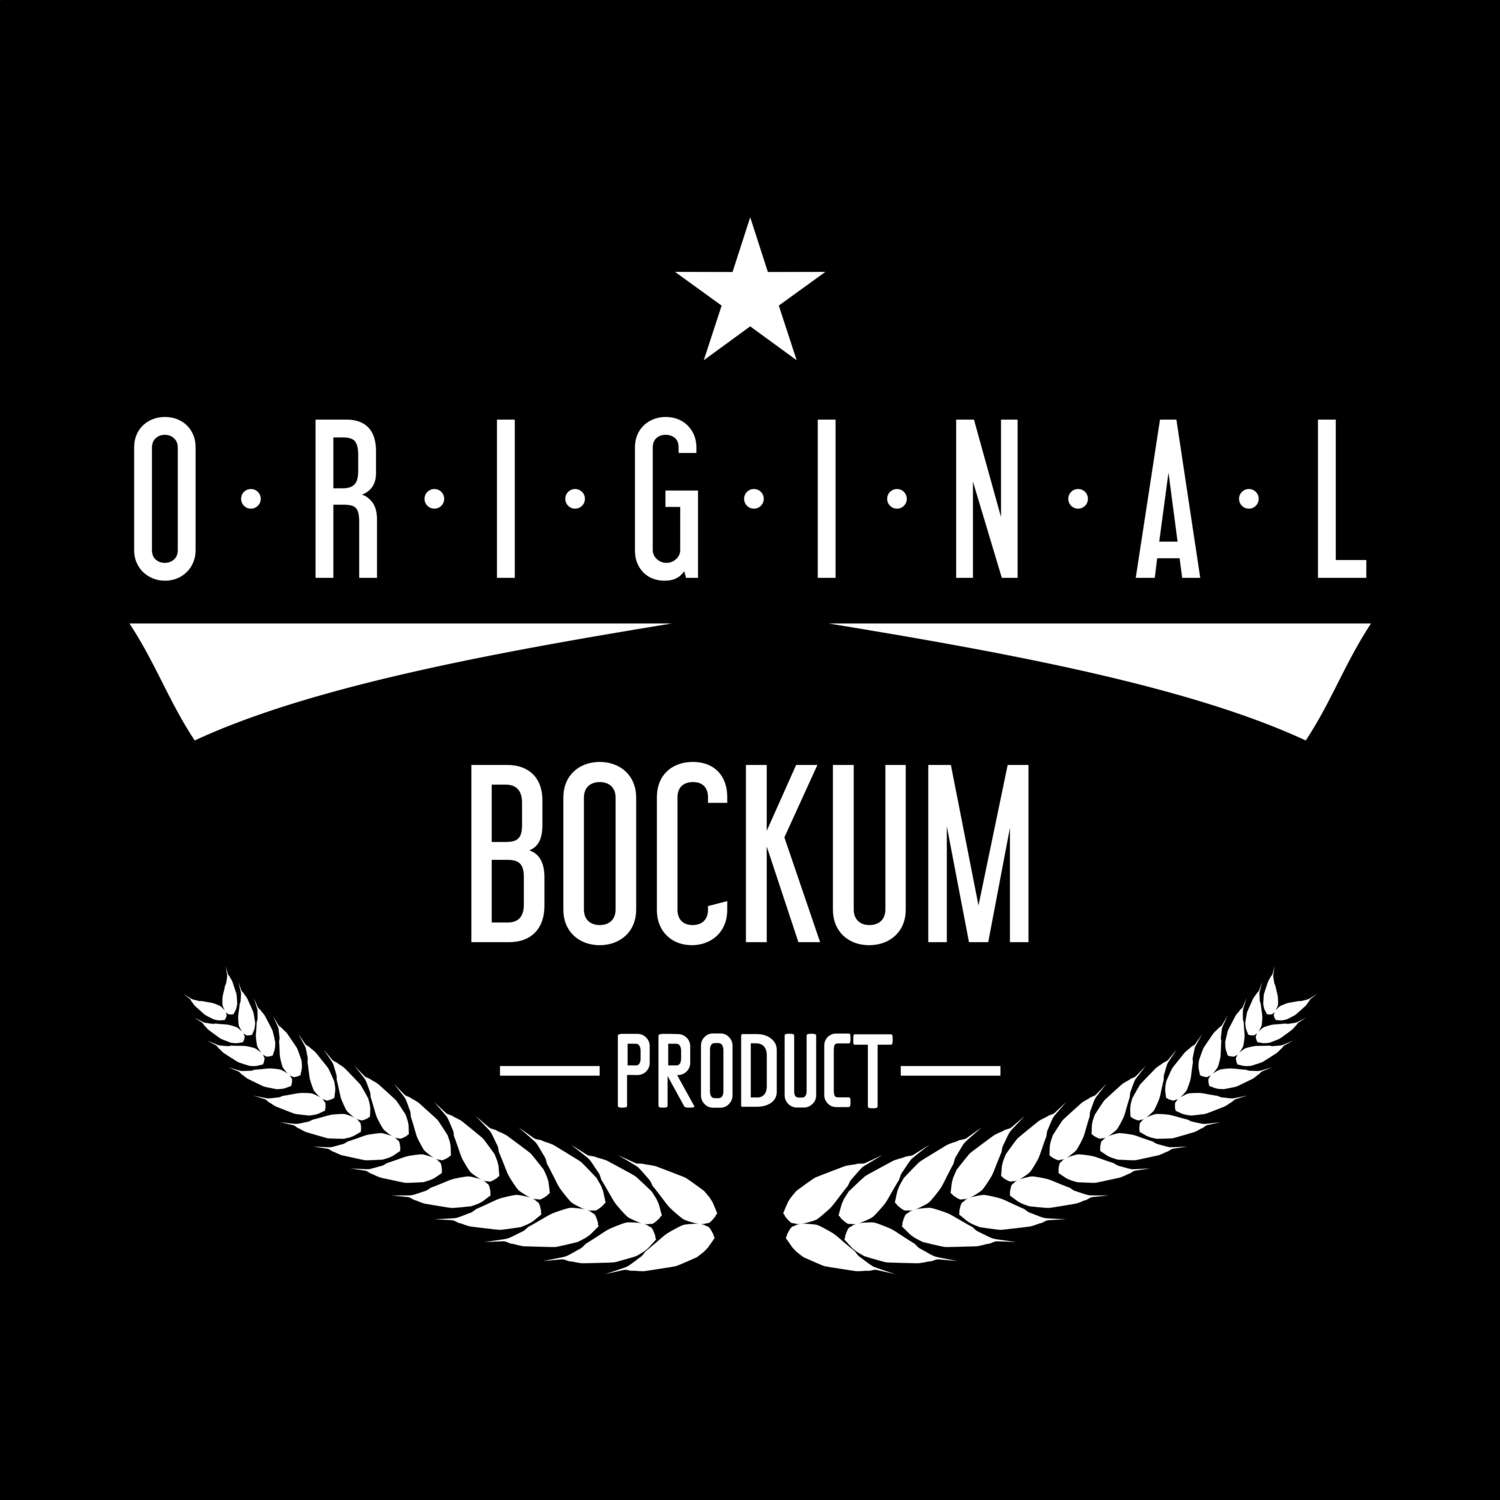 Bockum T-Shirt »Original Product«